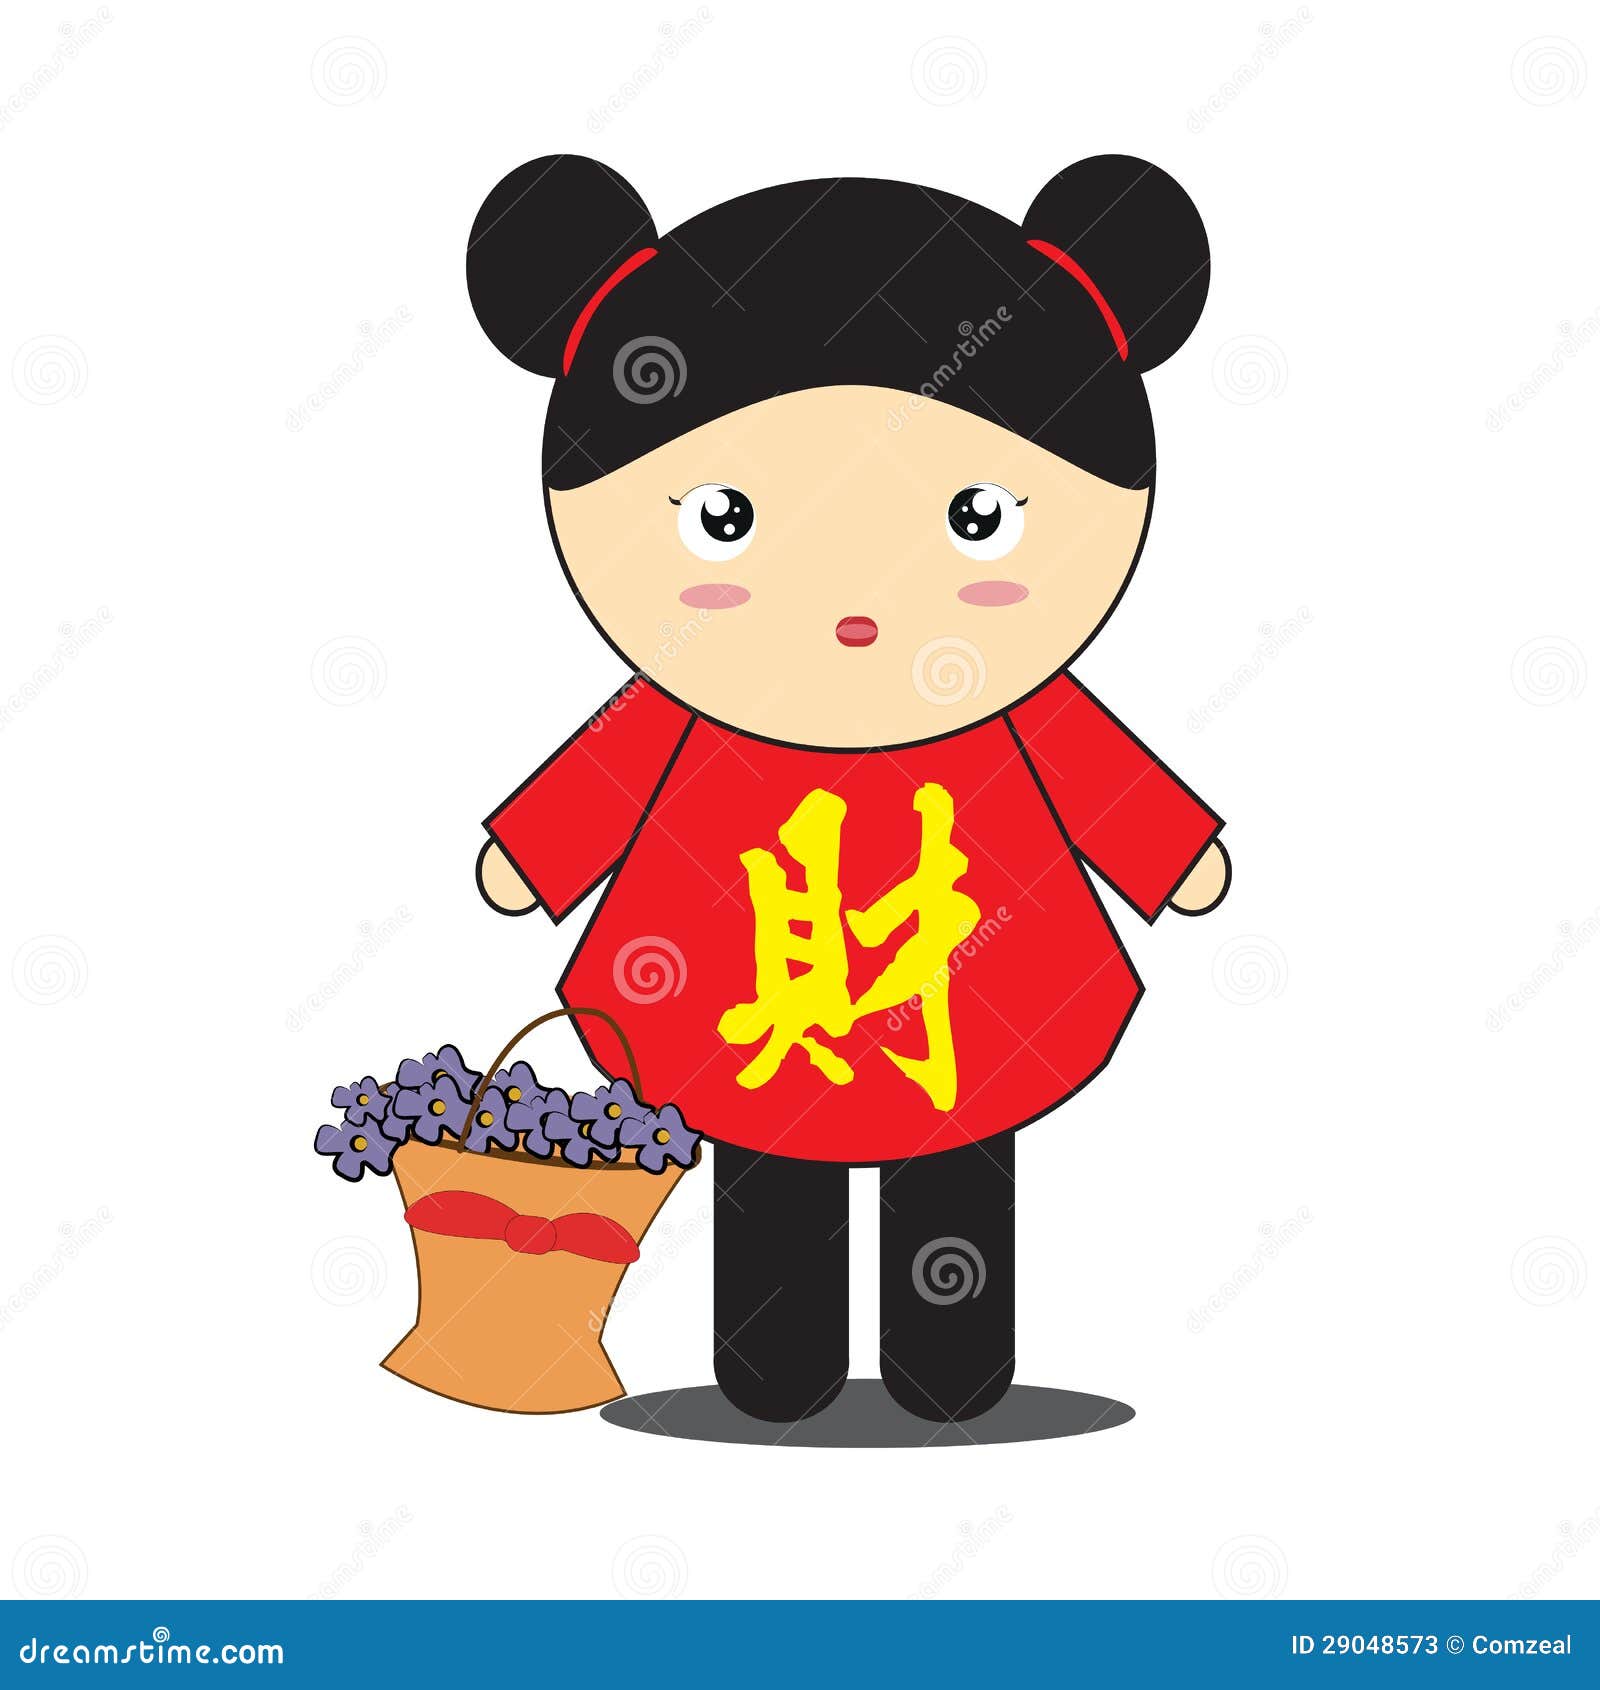 Chinese girl cartoon stock illustration. Illustration of adorable - 29048573